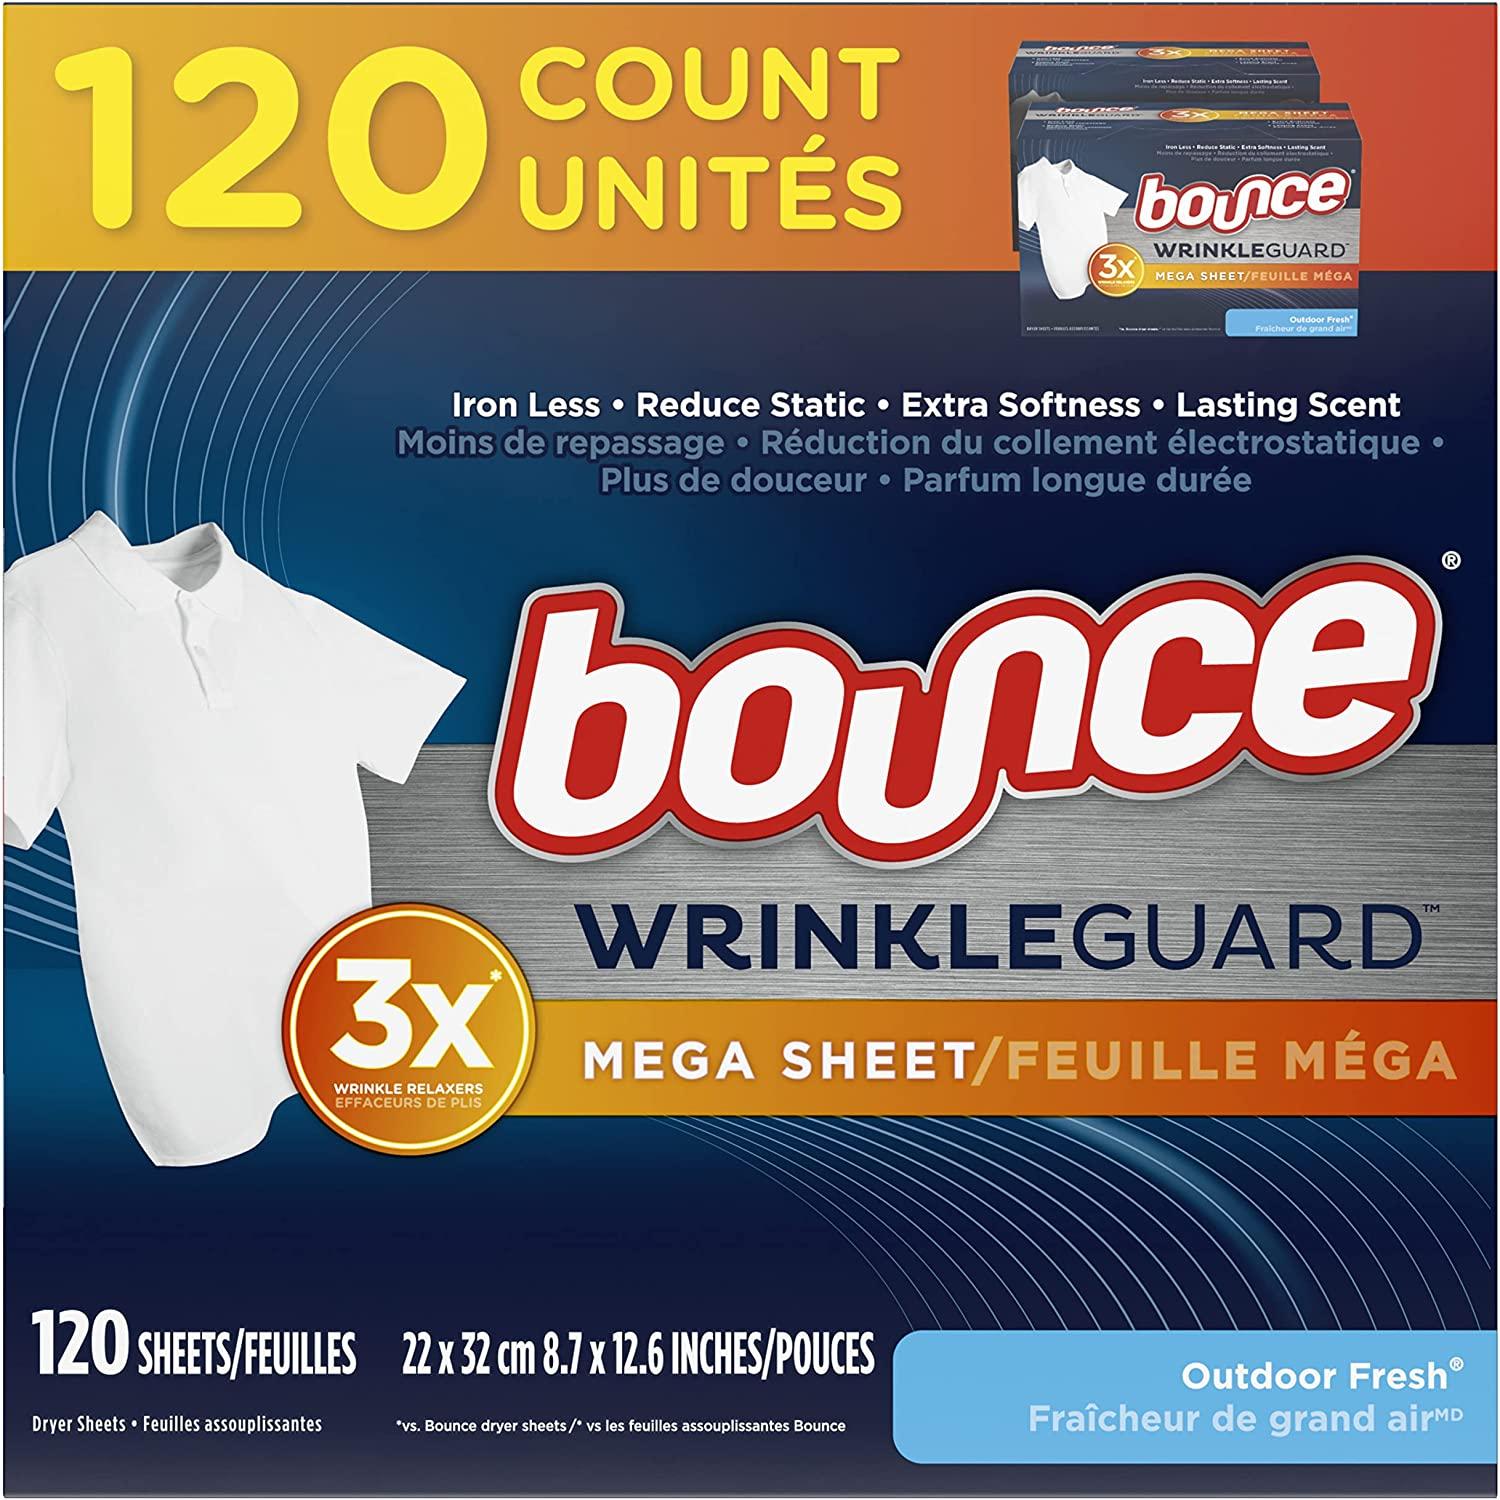 120 Bounce Wrinkleguard Fabric Softener Dryer Sheets for $5.69 Shipped